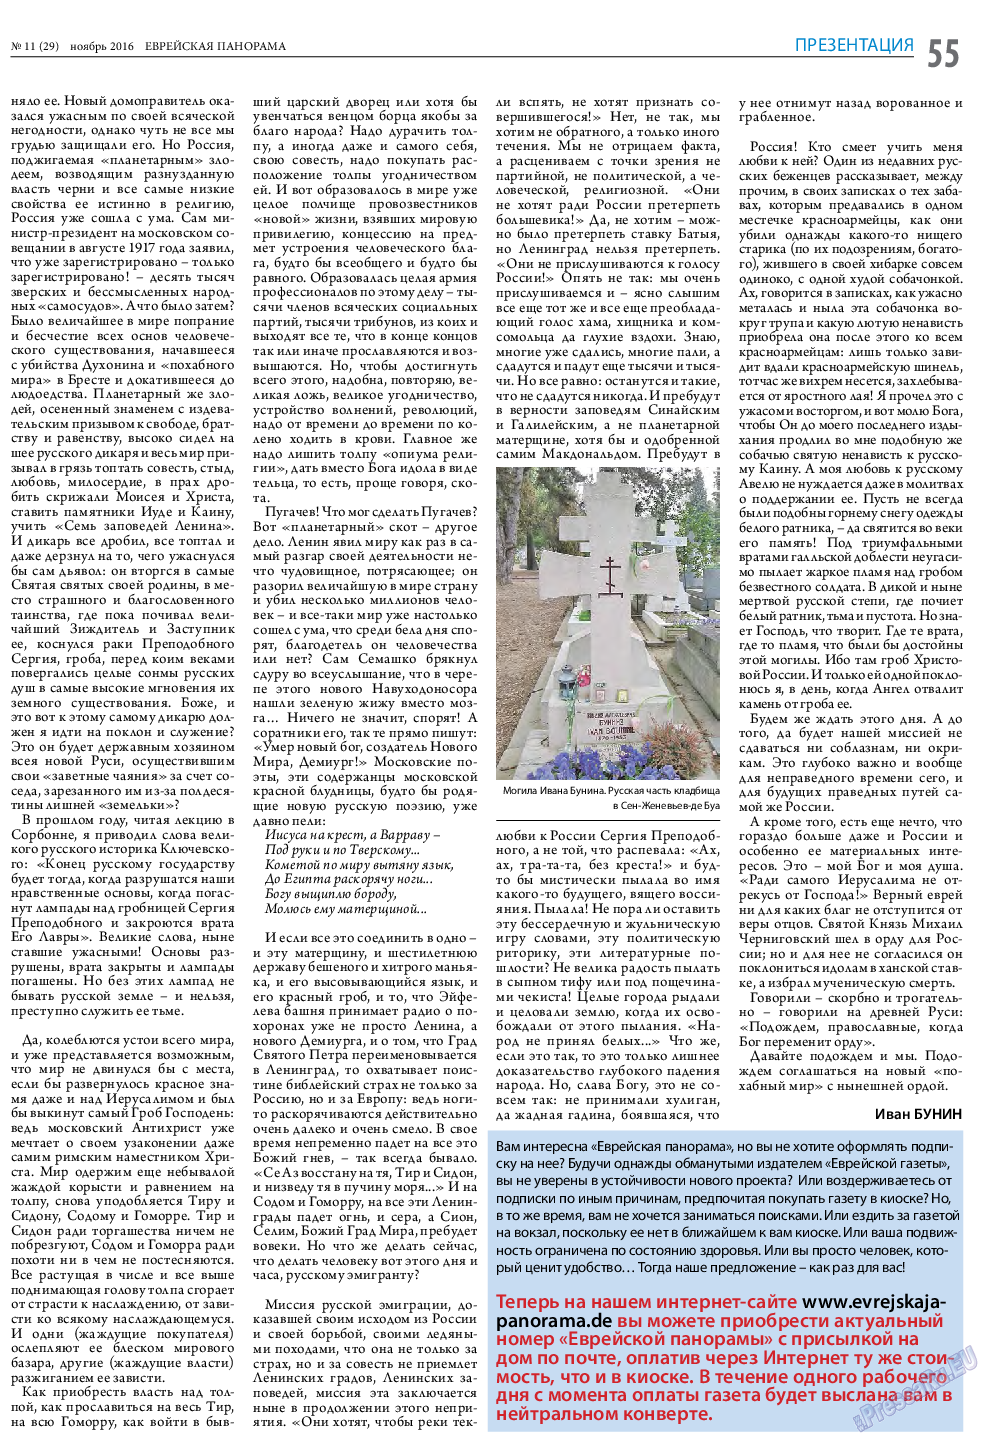 Еврейская панорама, газета. 2016 №11 стр.55